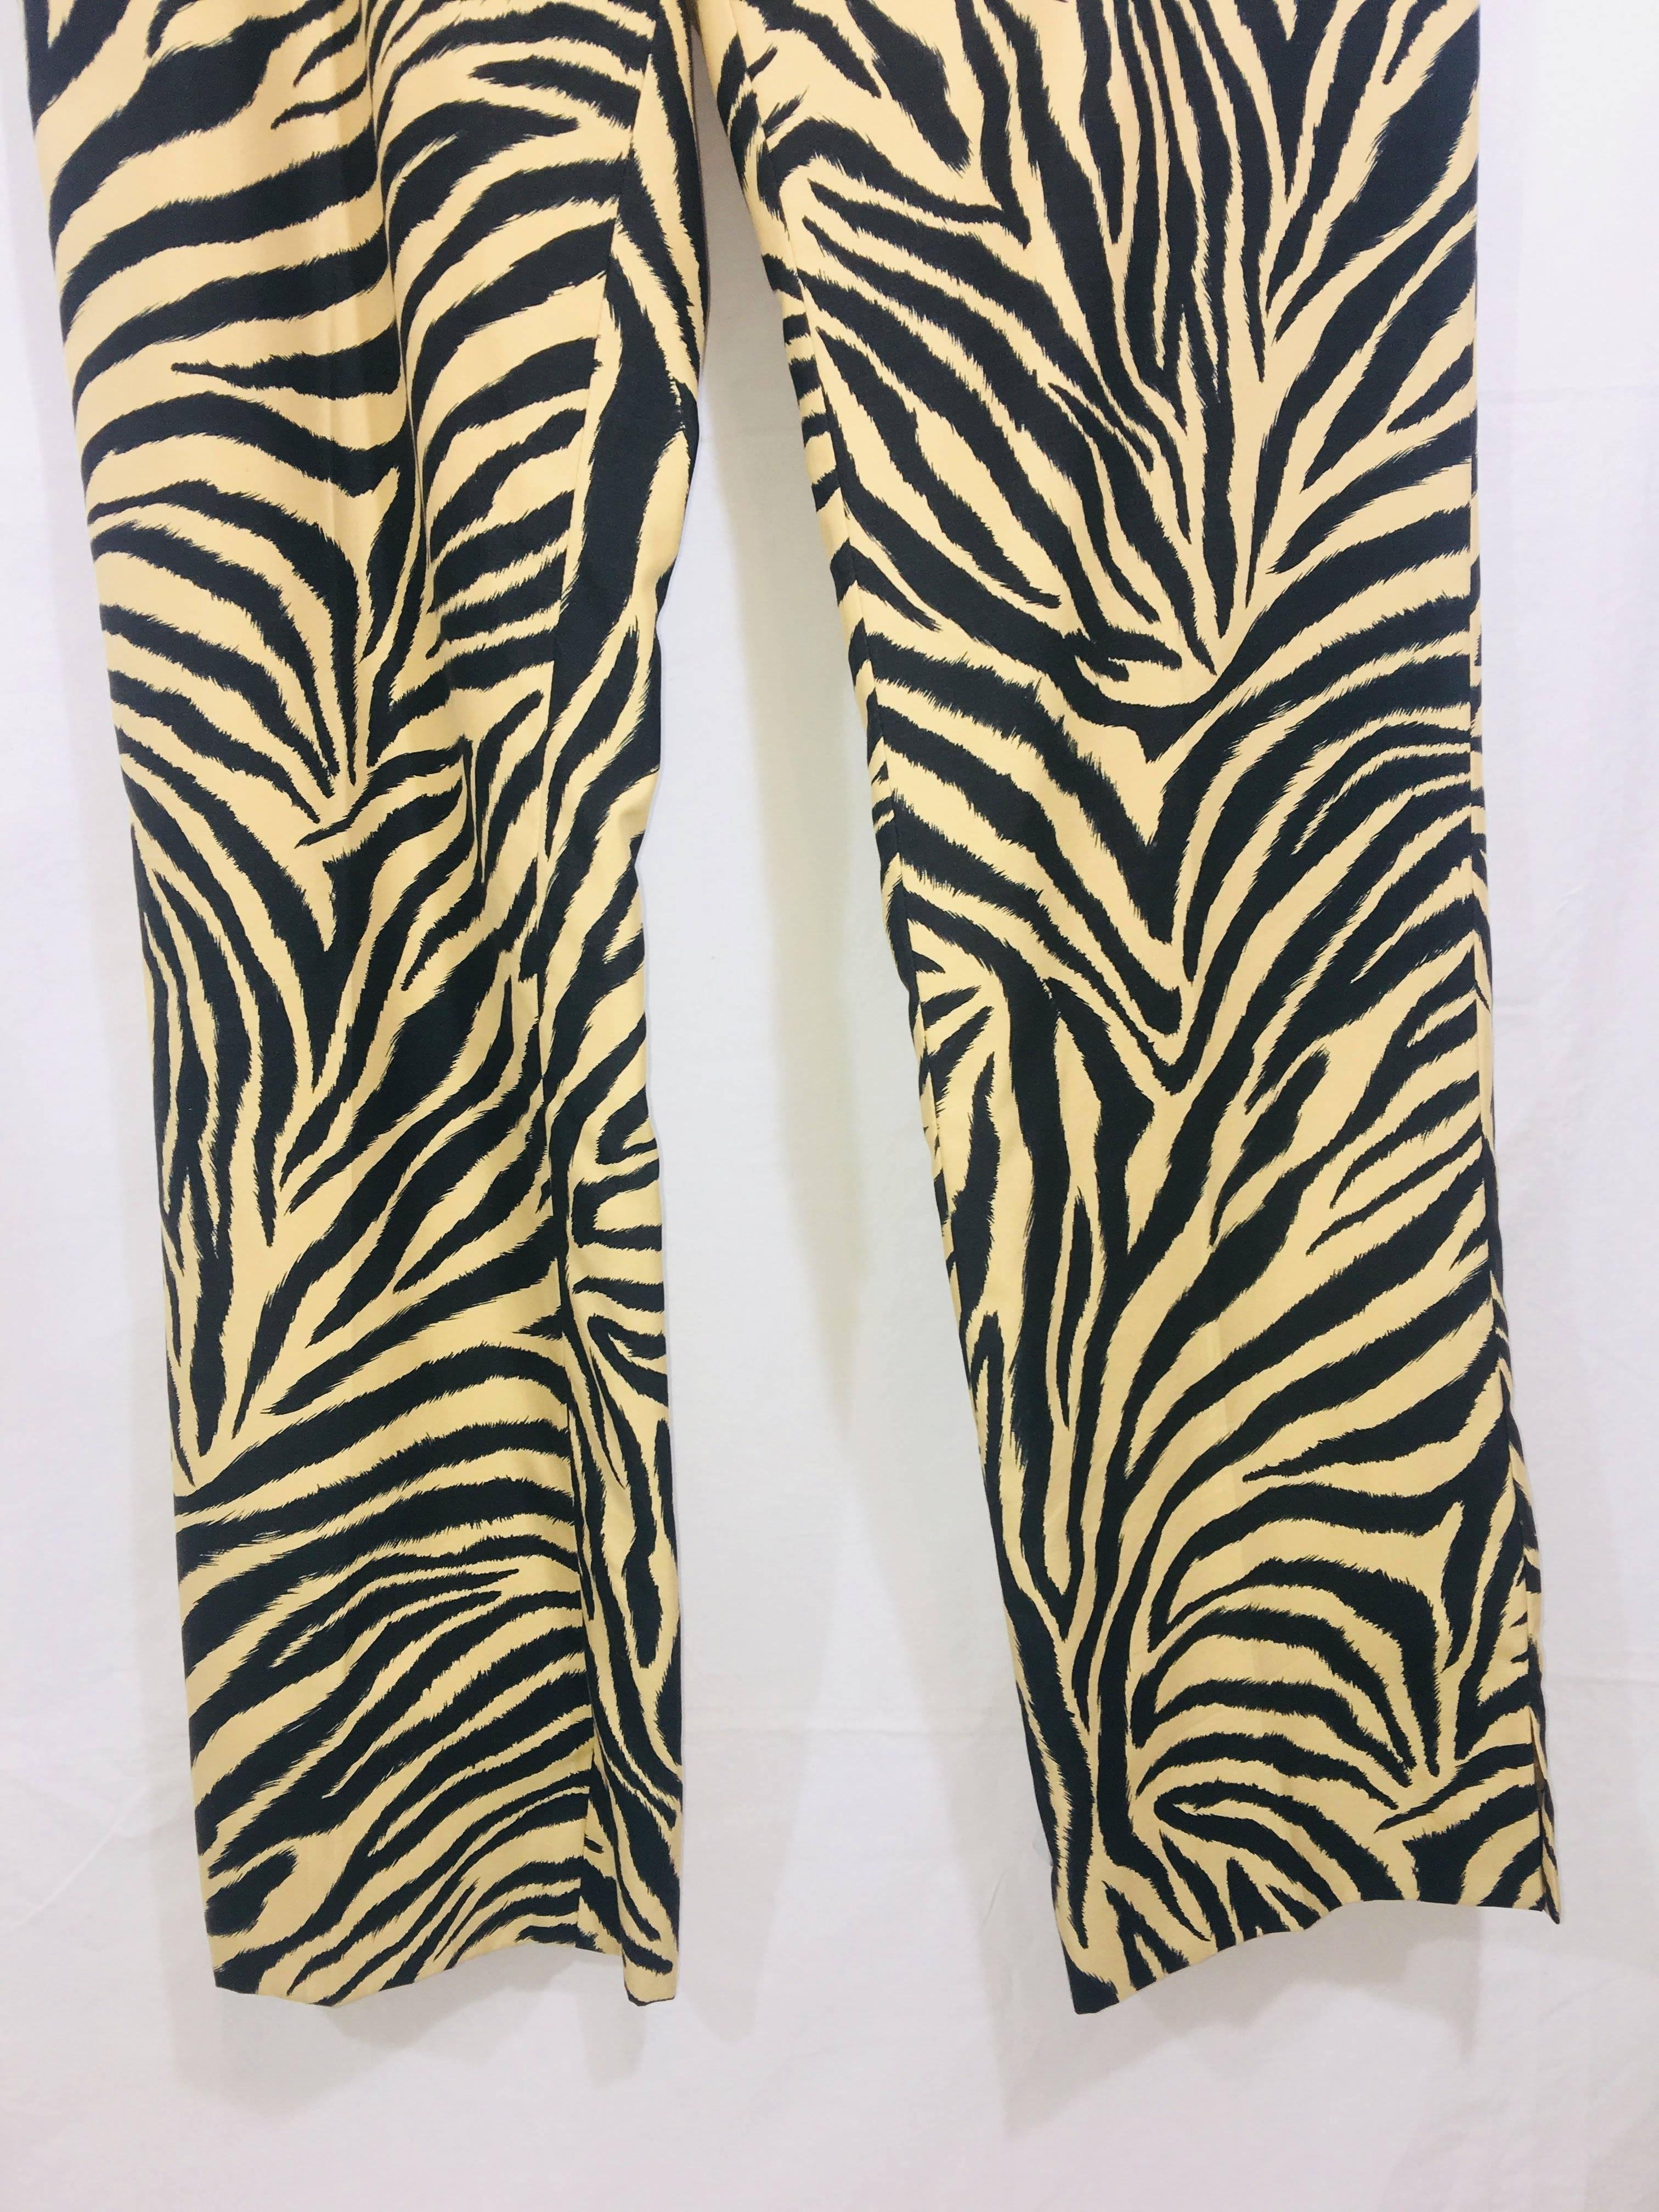 Carolina Herrera Animal/Zebra Print Pant in Cotton.